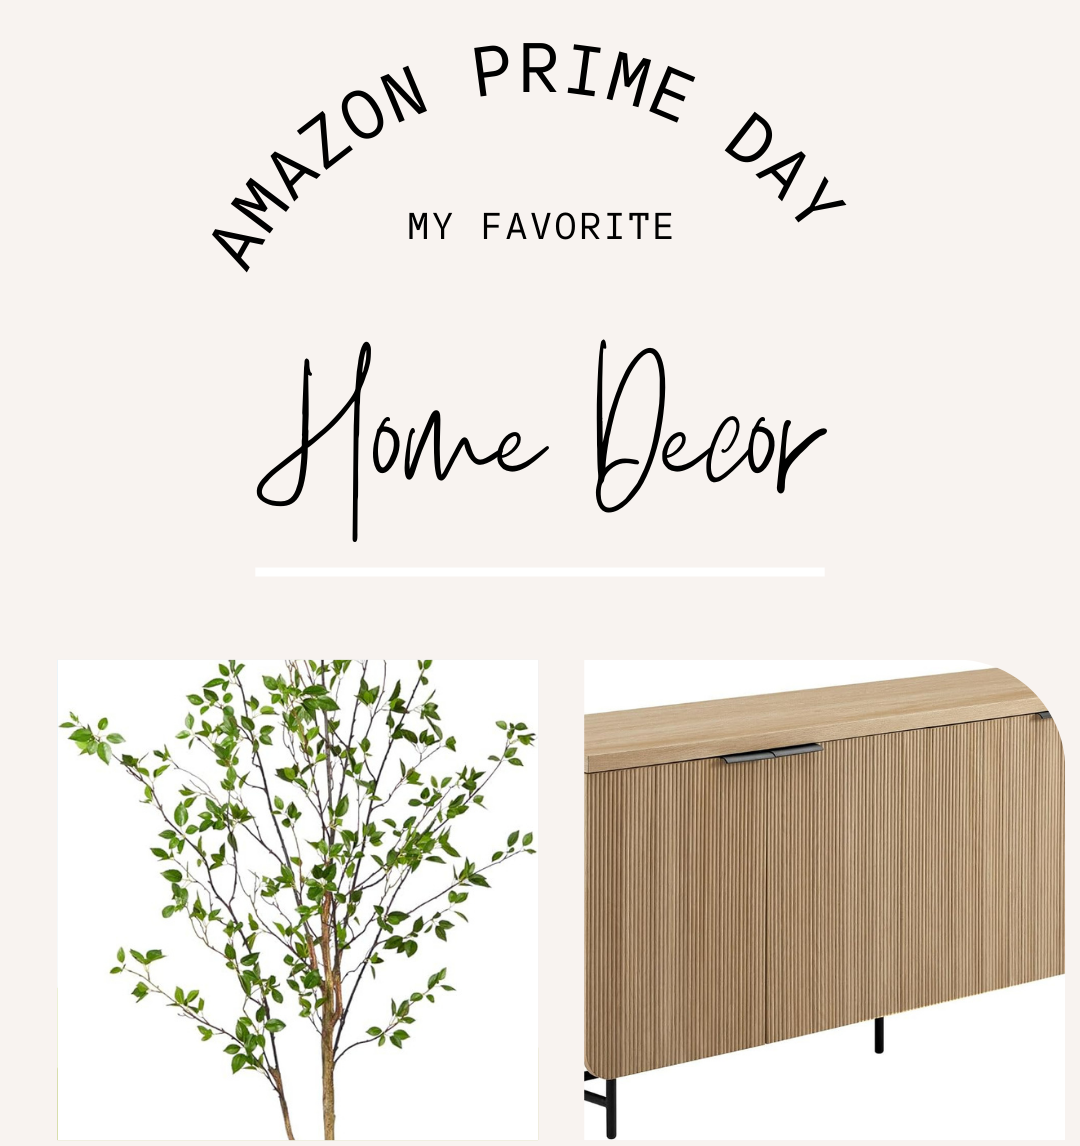 Best Amazon Prime Day Favorite Deals